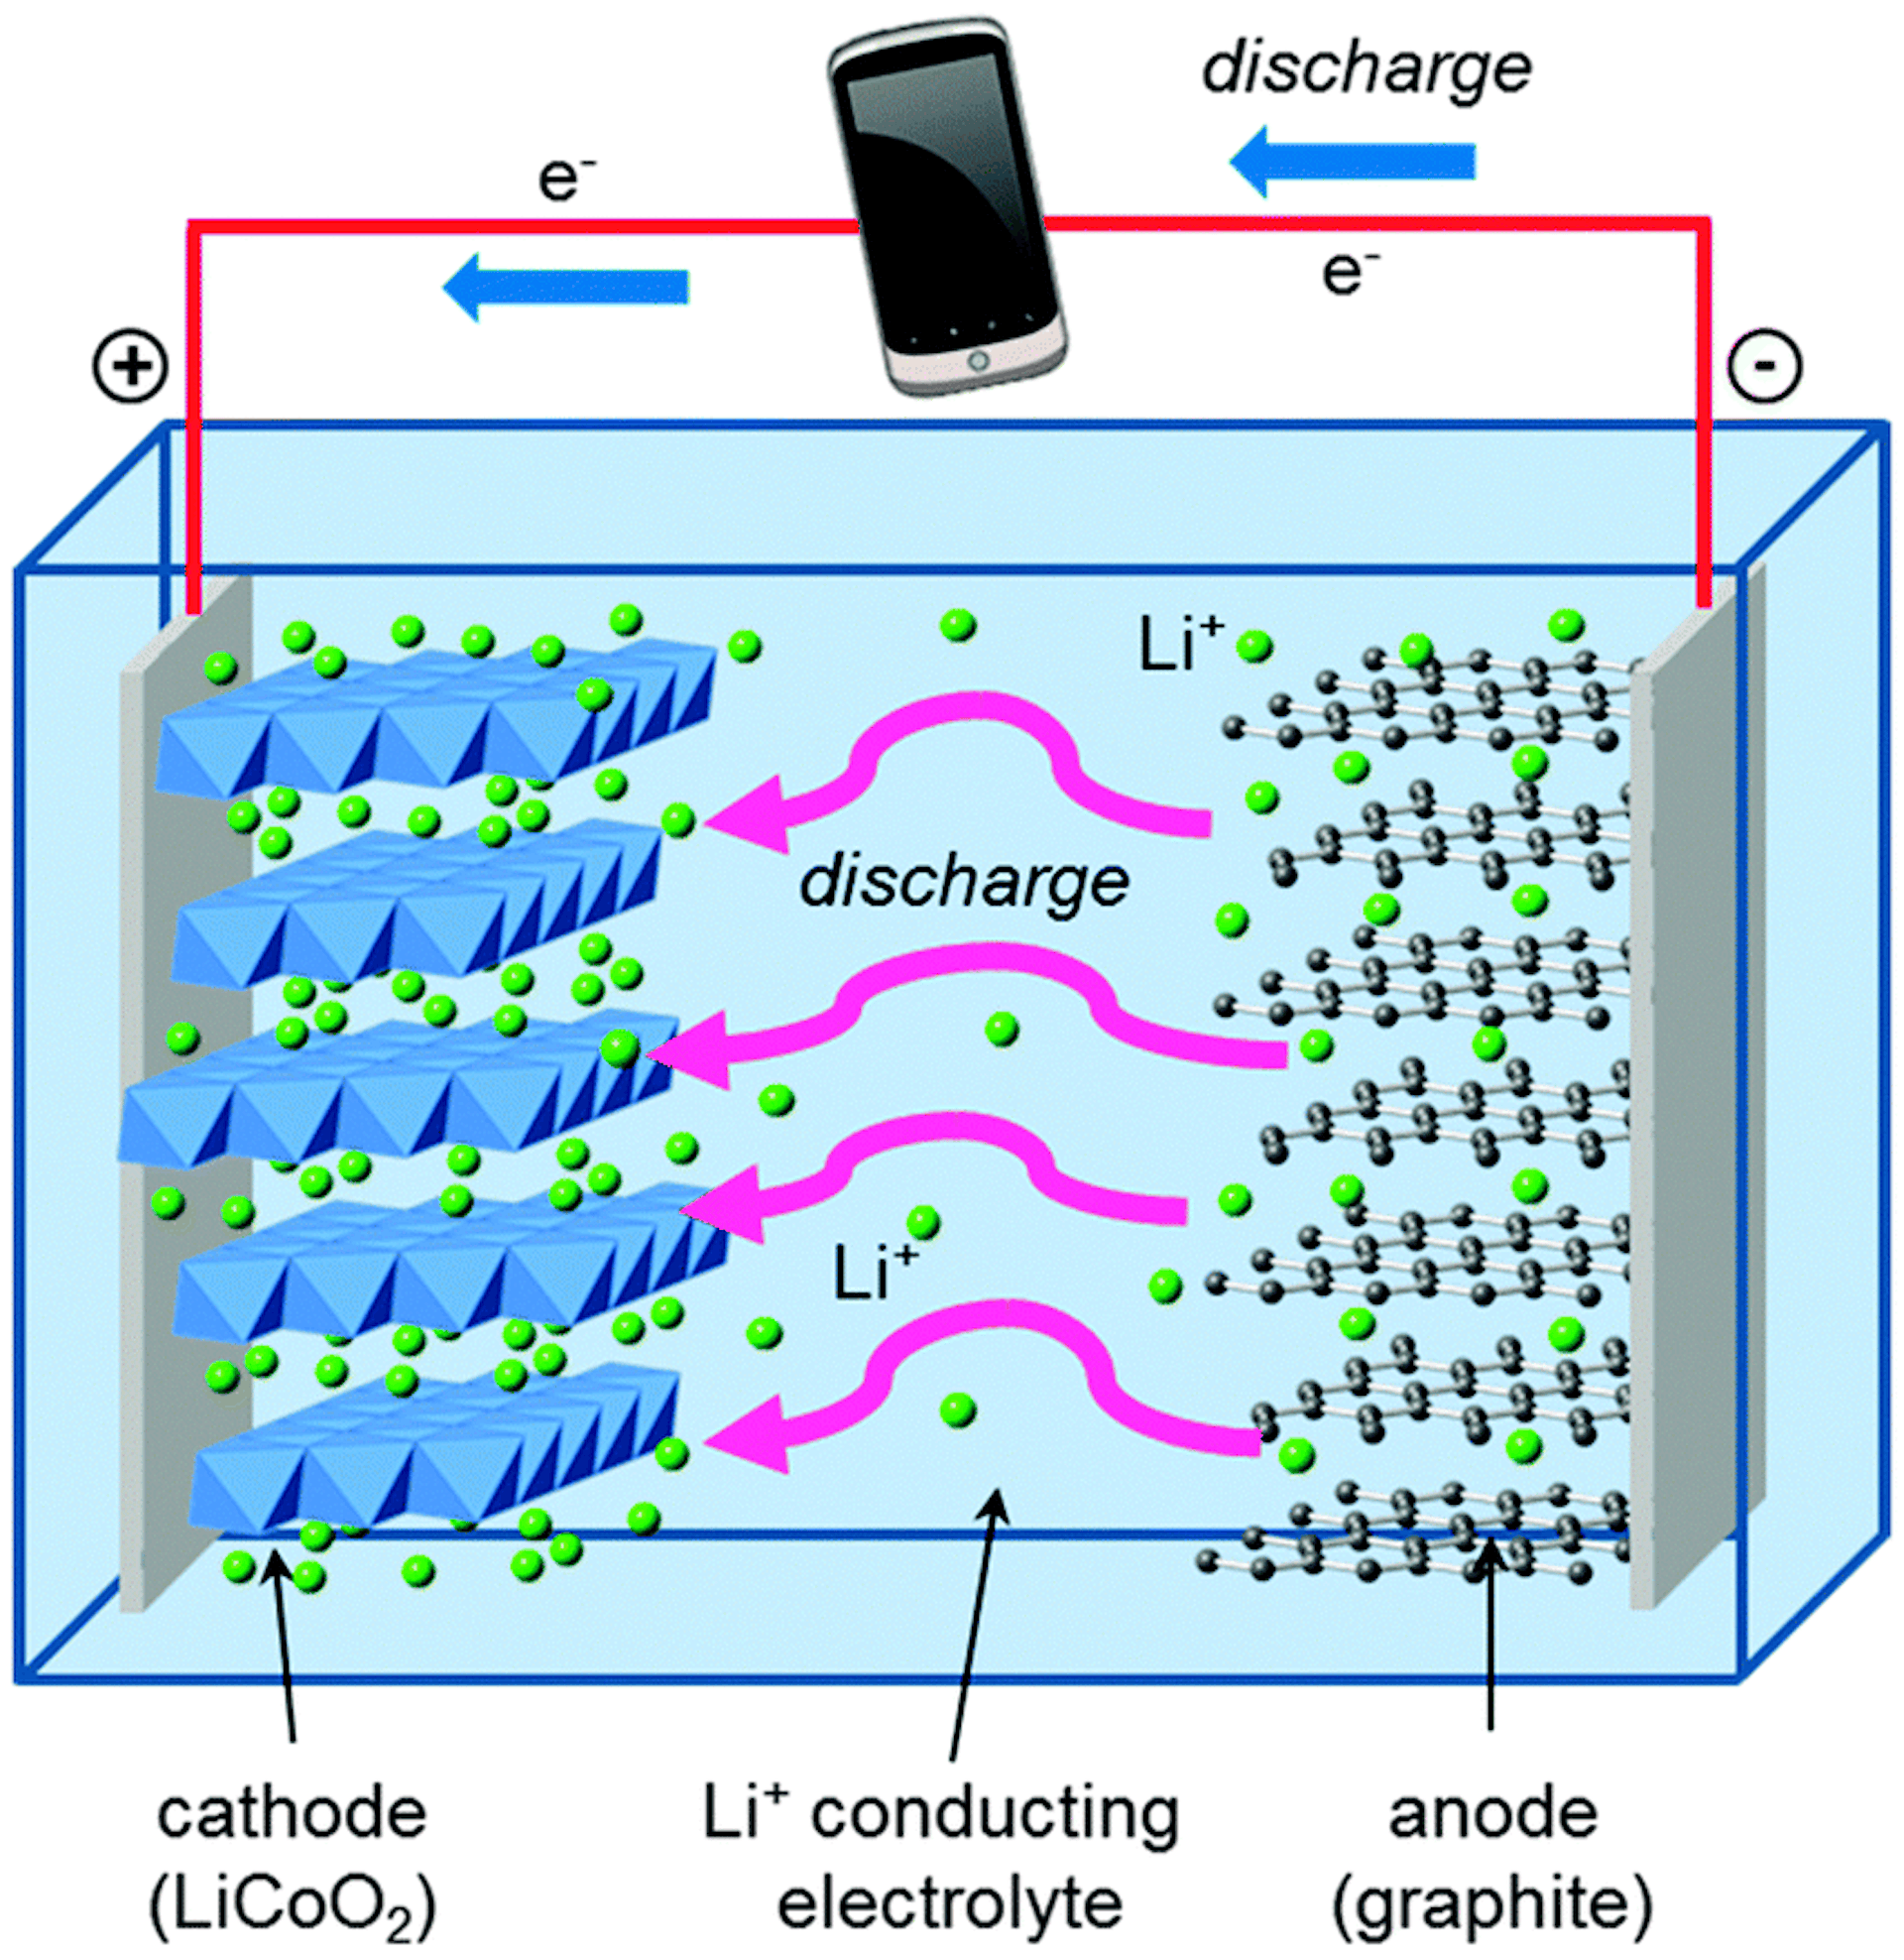 lithium aaa batteries vs alkaline